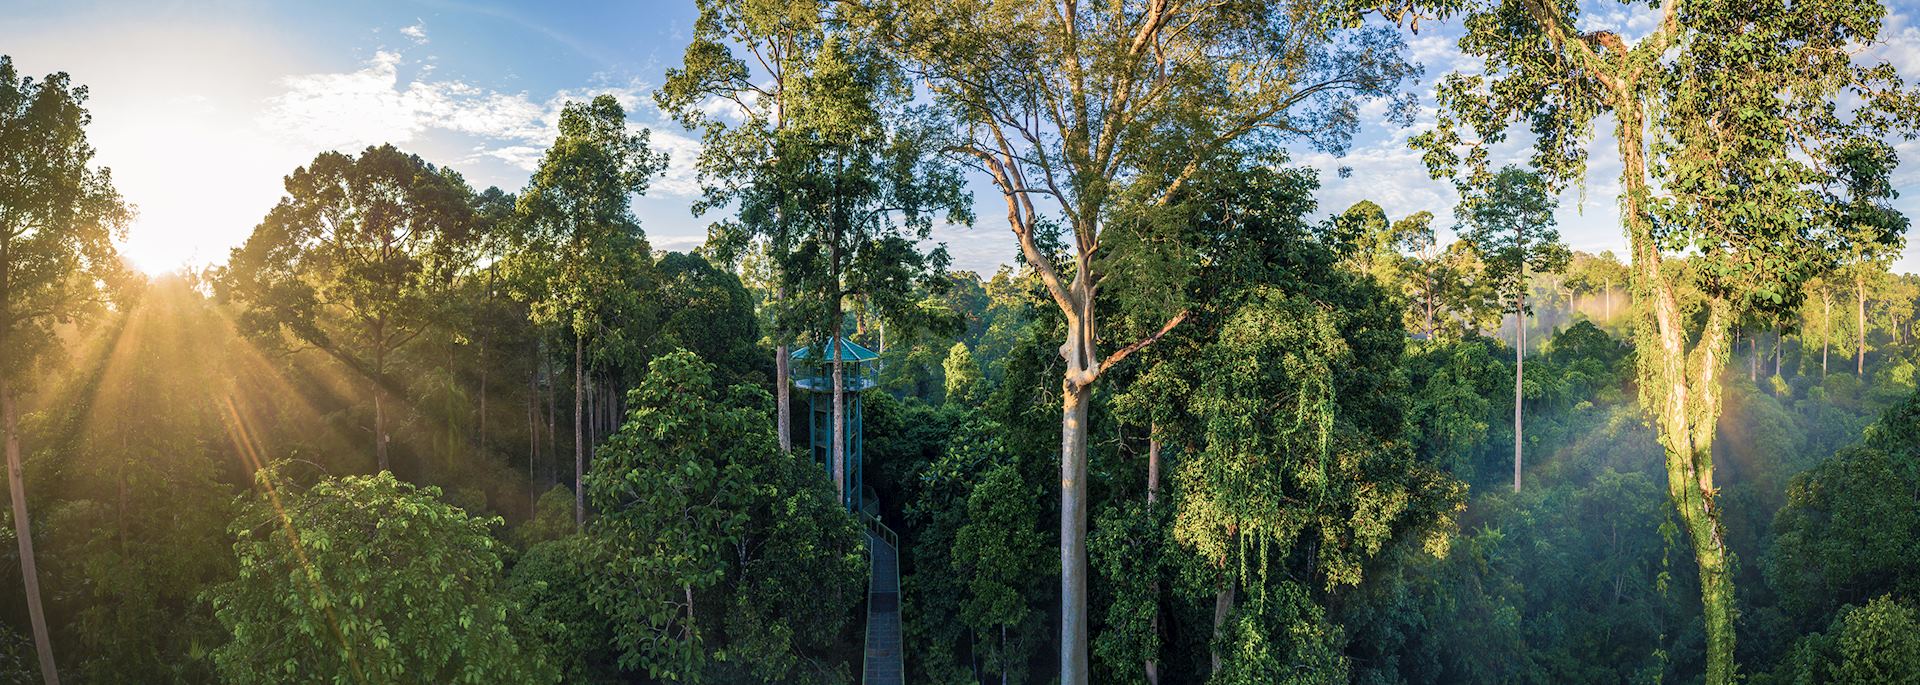 Rainforest canopy in Sepilok, Borneo